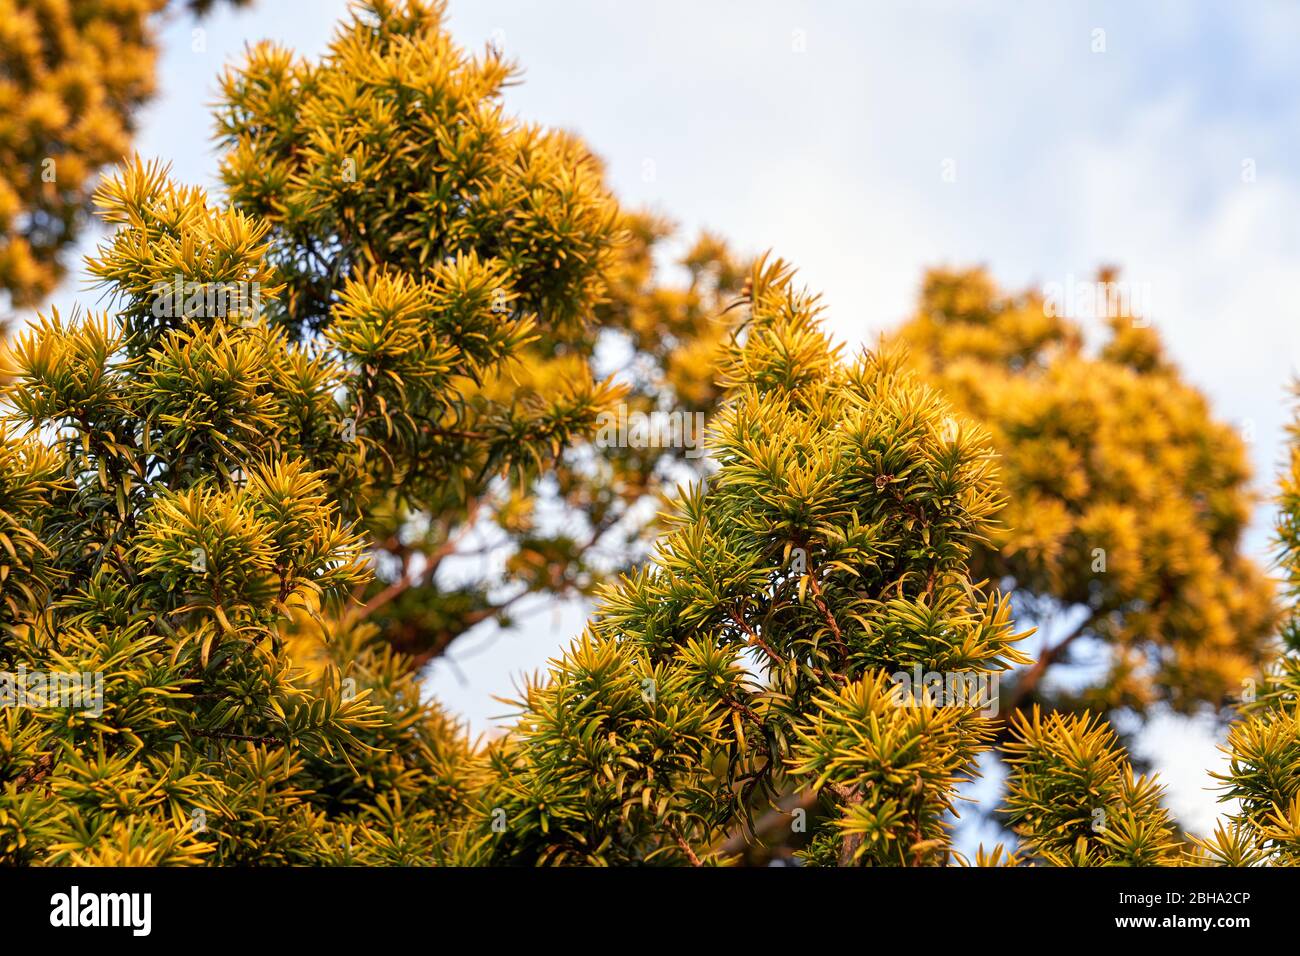 A golden Irish yew shrub growing in a garden in South Wales, UK Stock Photo